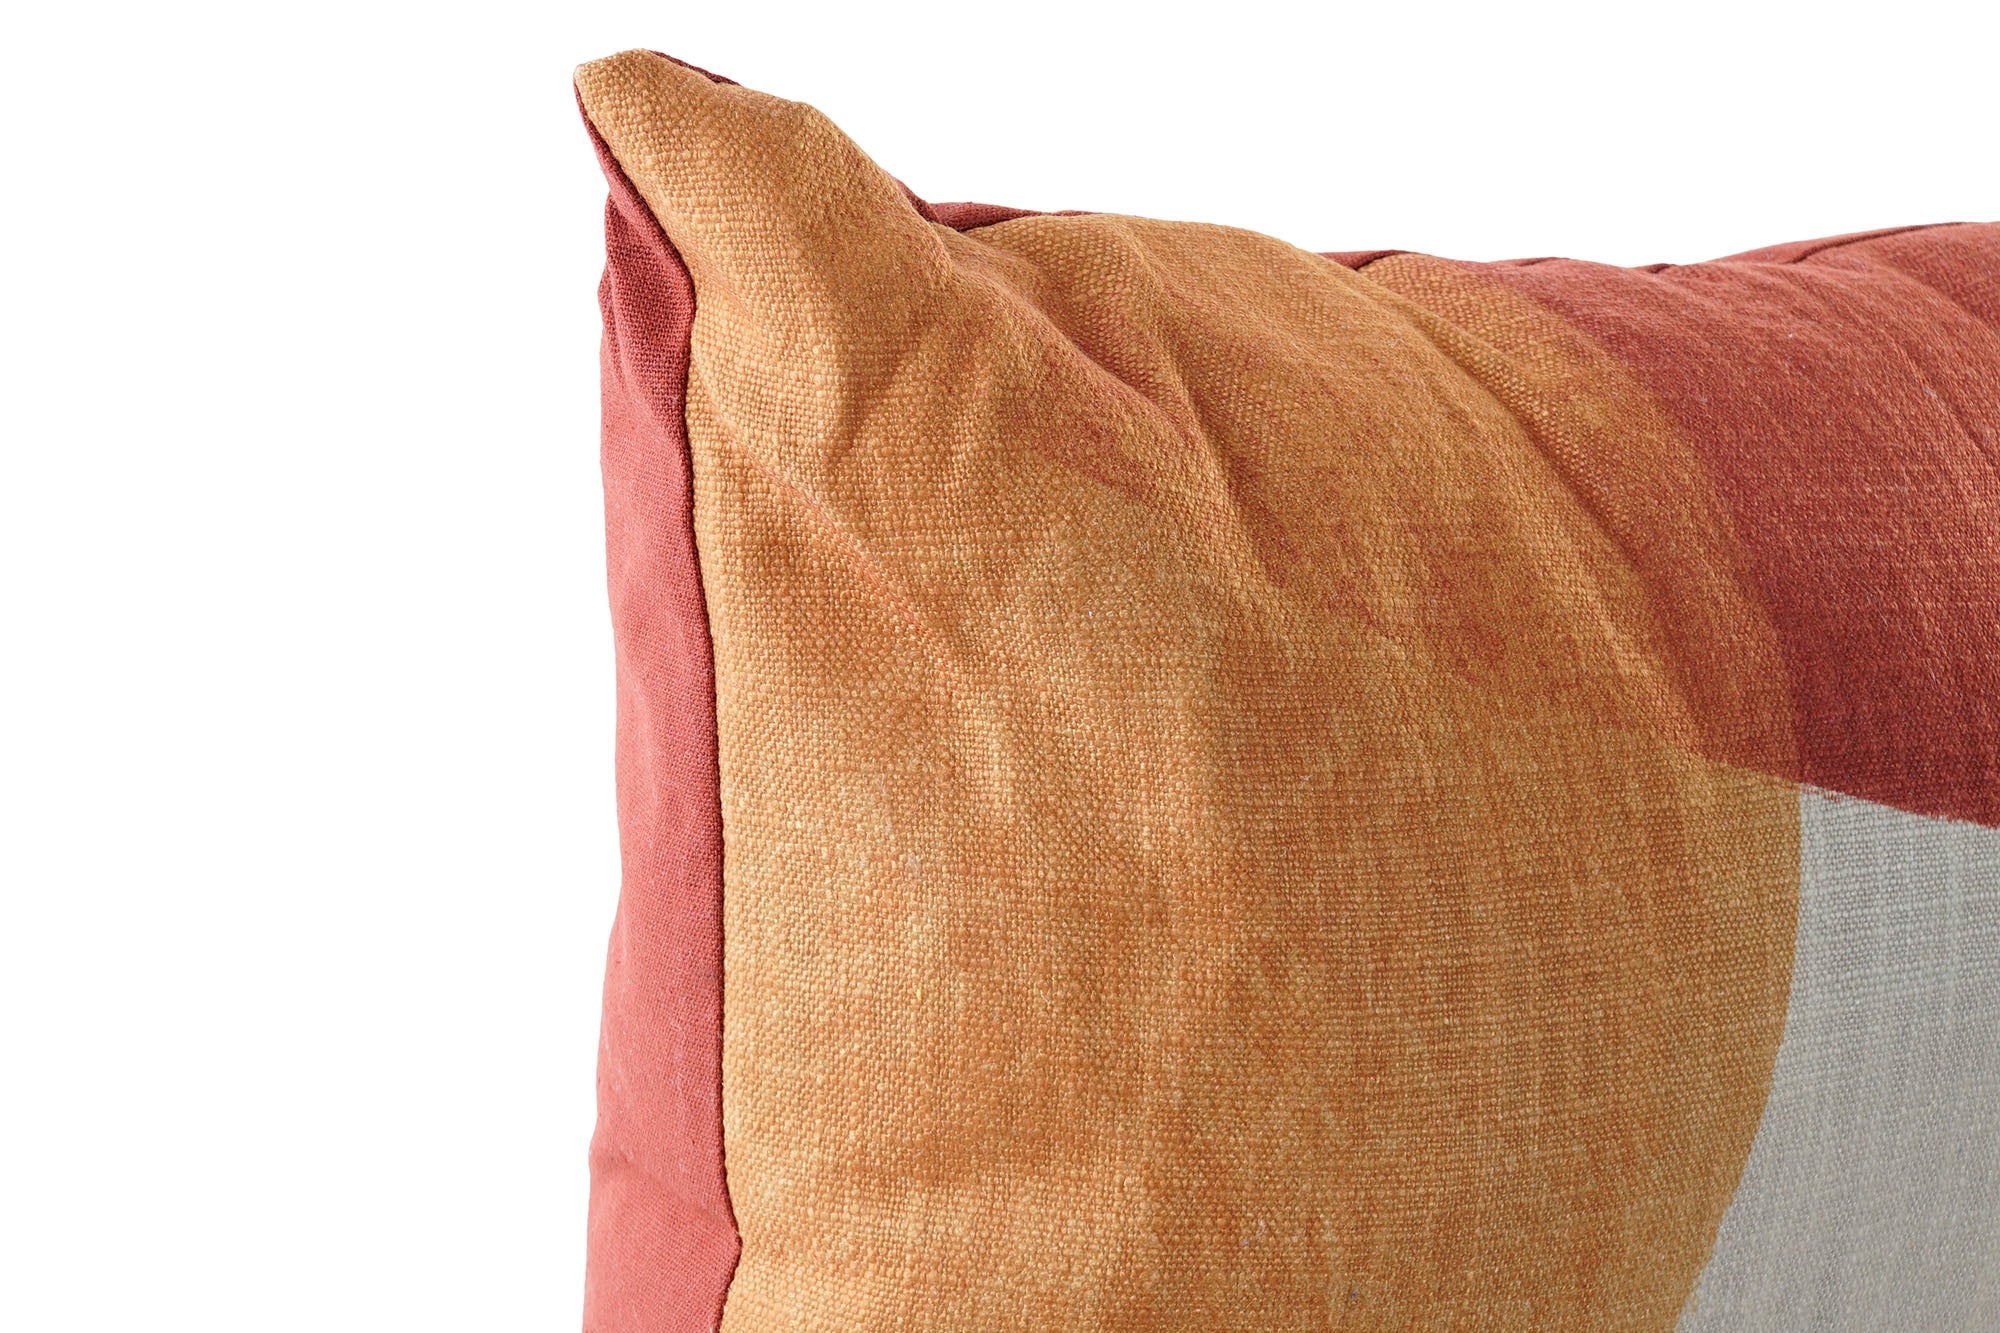 Regular cushion in polyester